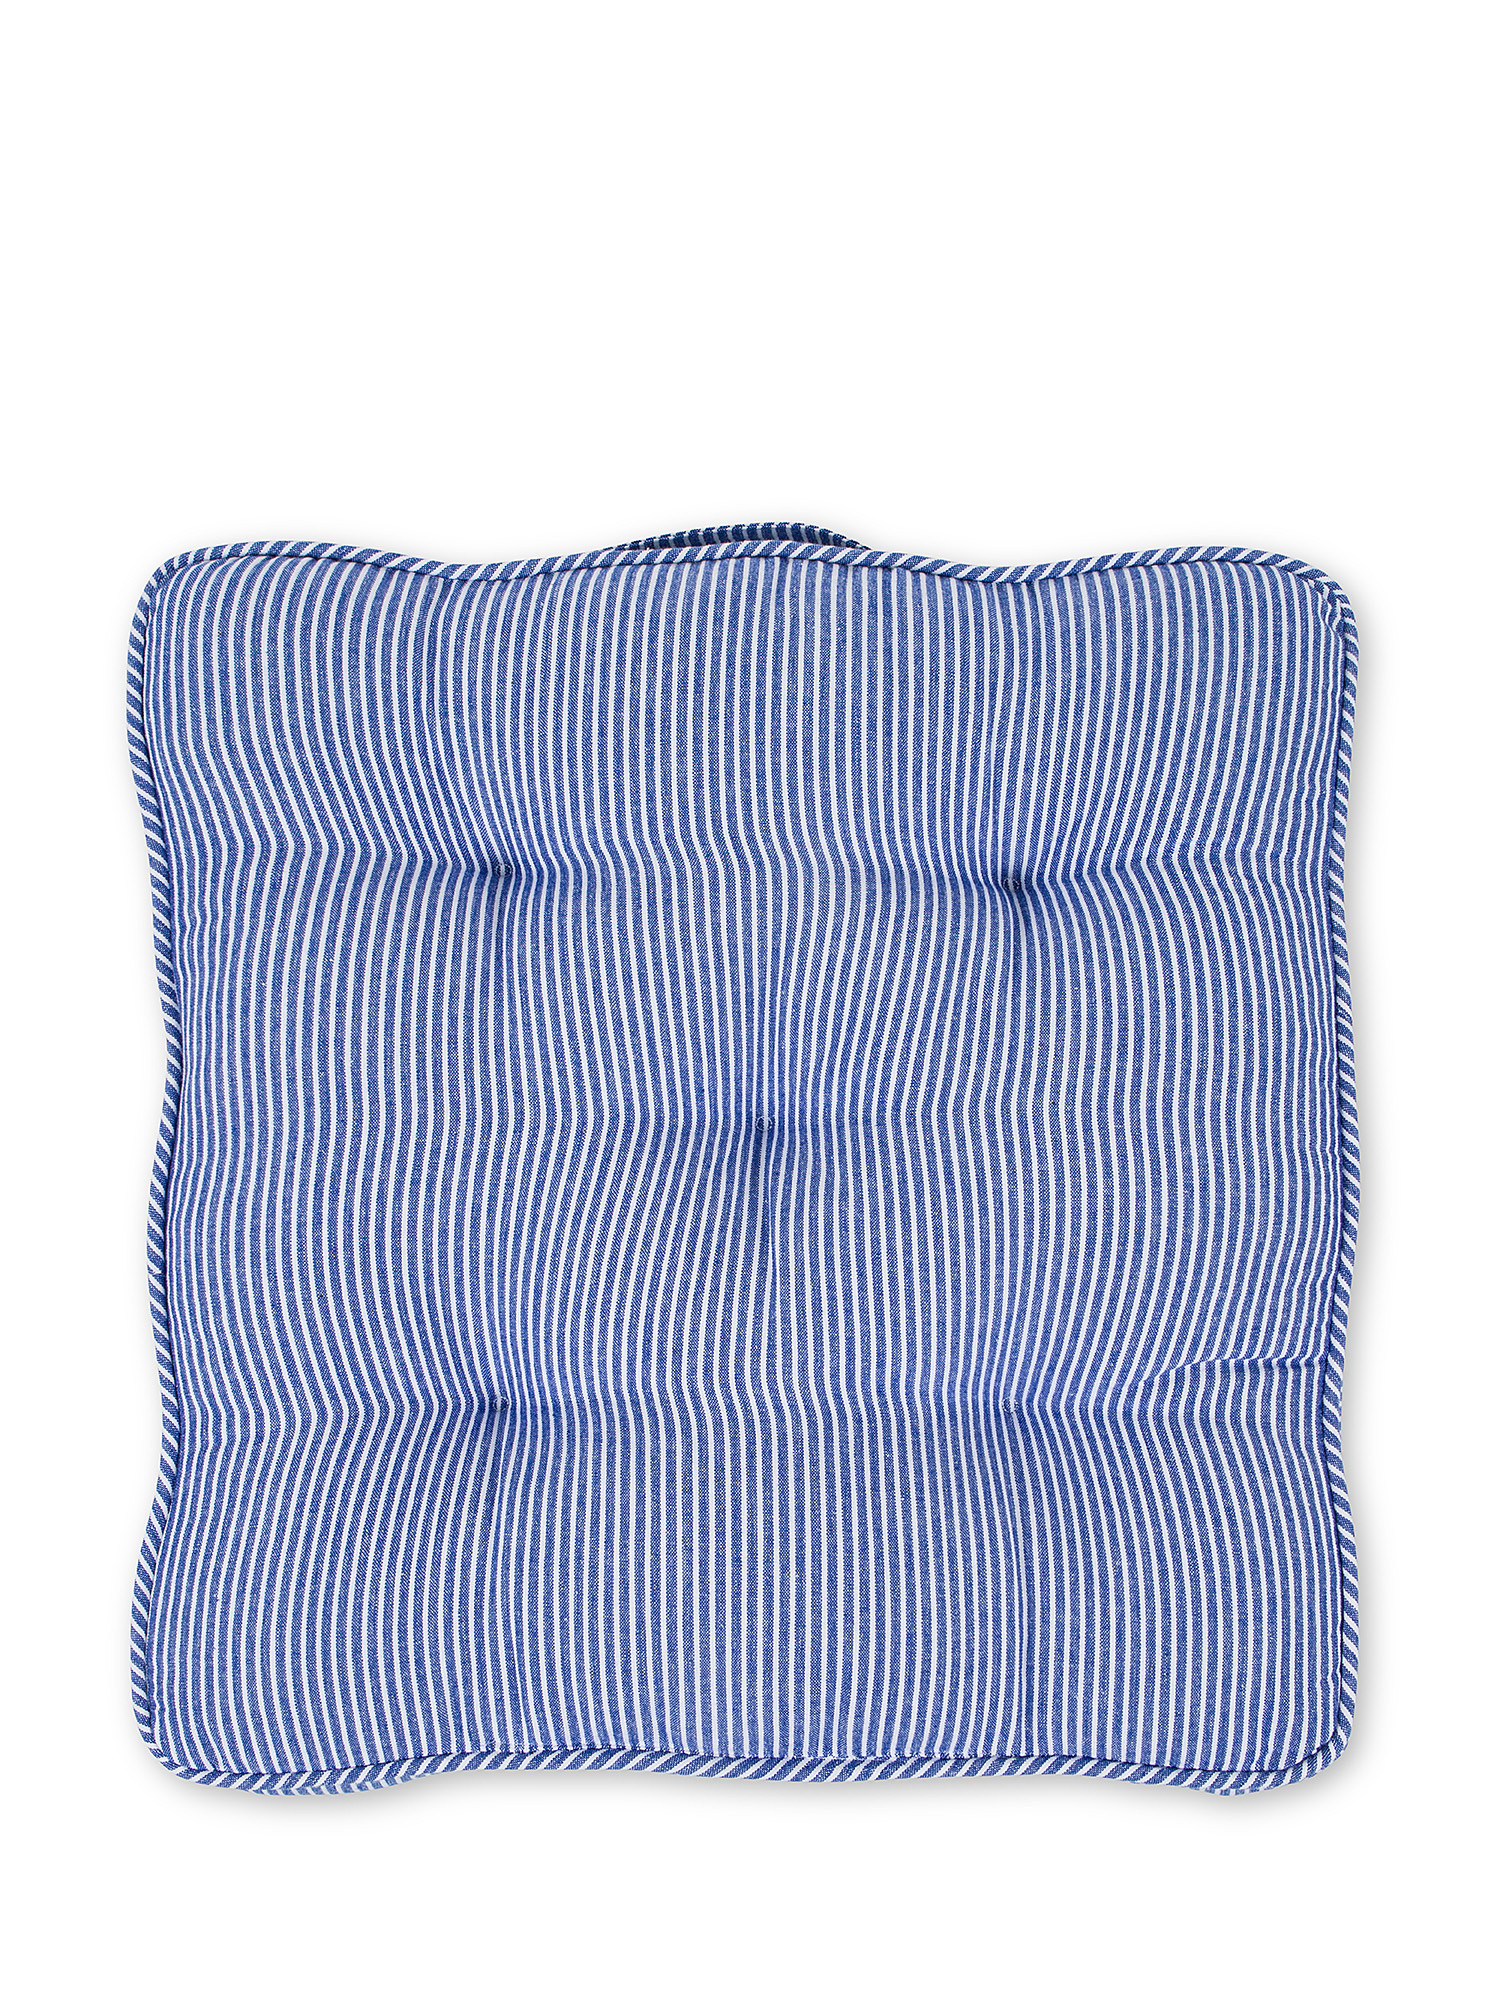 Mattress cushion 50x 50 cm, White / Blue, large image number 1